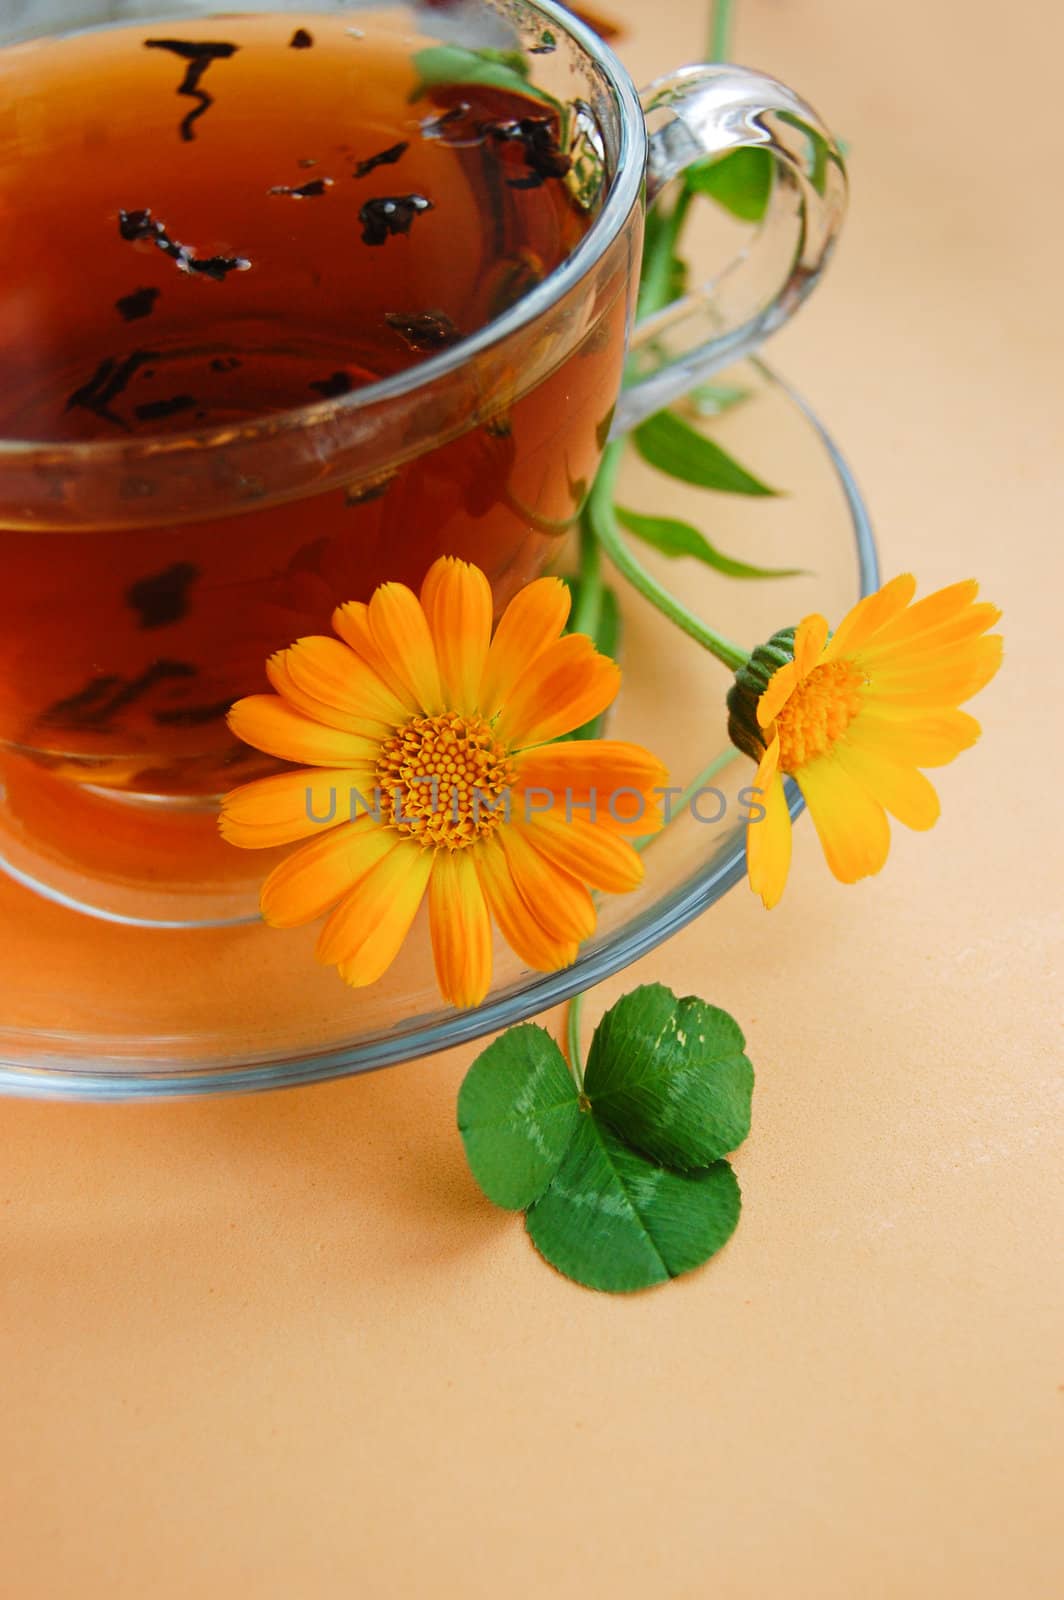 Curative tea with calendula flowers by Angel_a